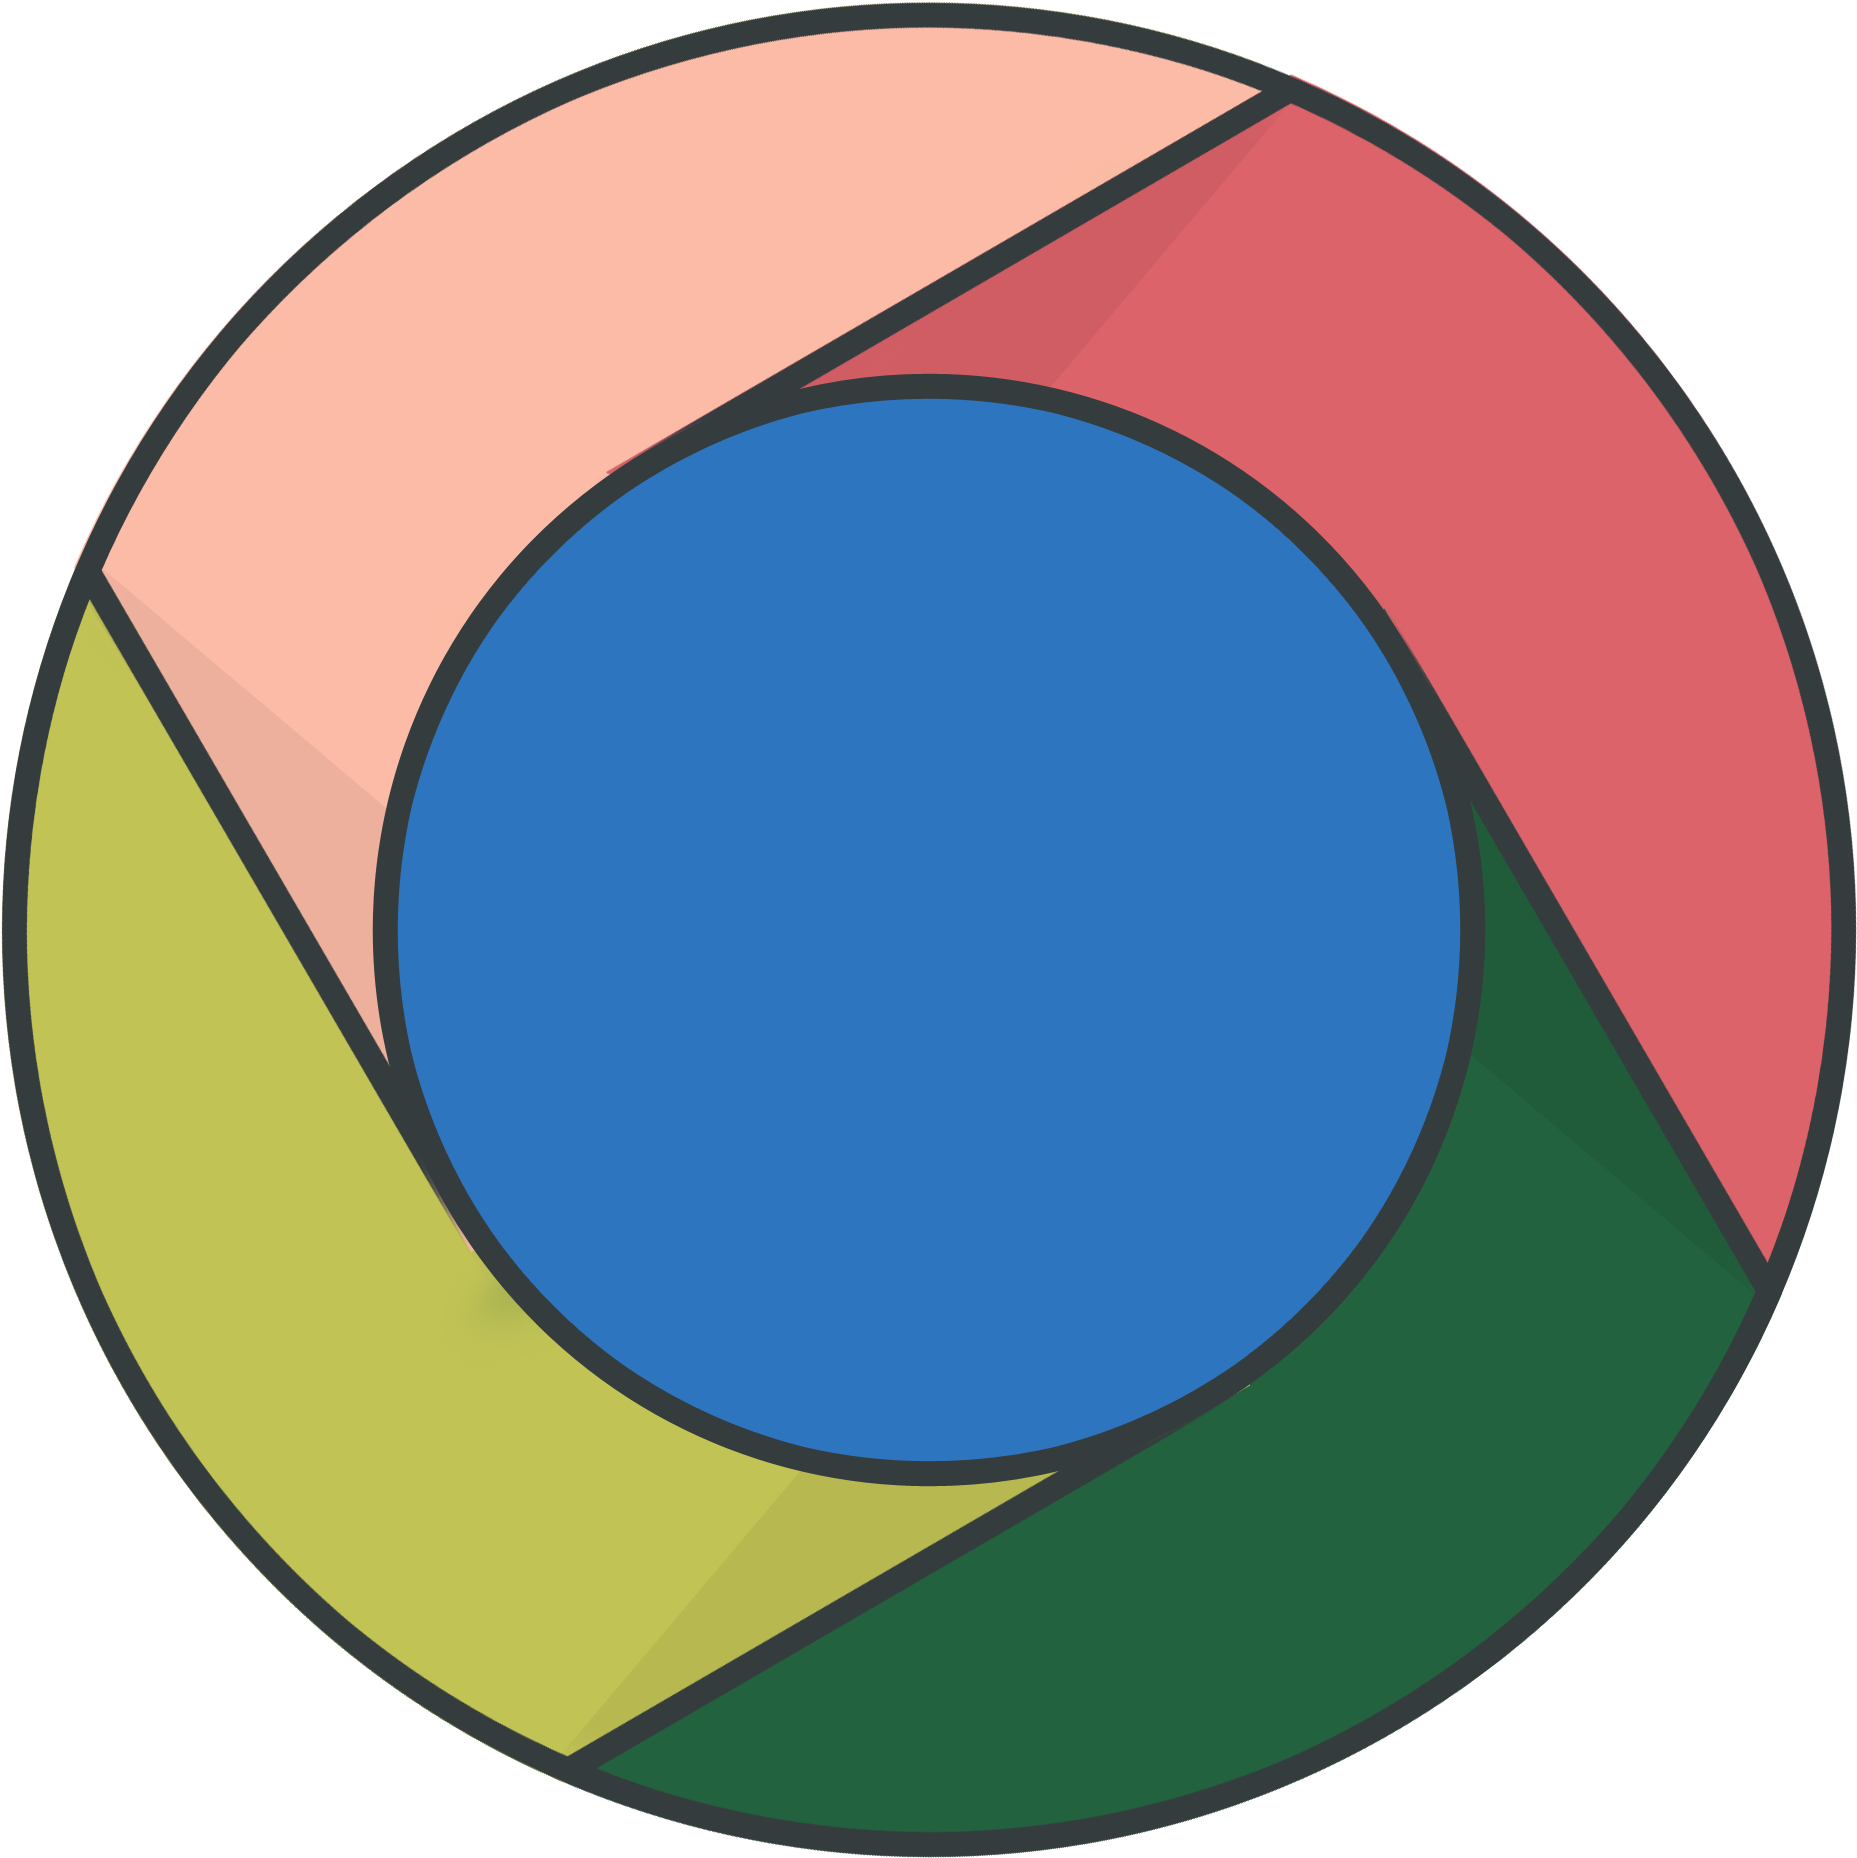 Chrome Logo Google Photos Free Download Image PNG Image